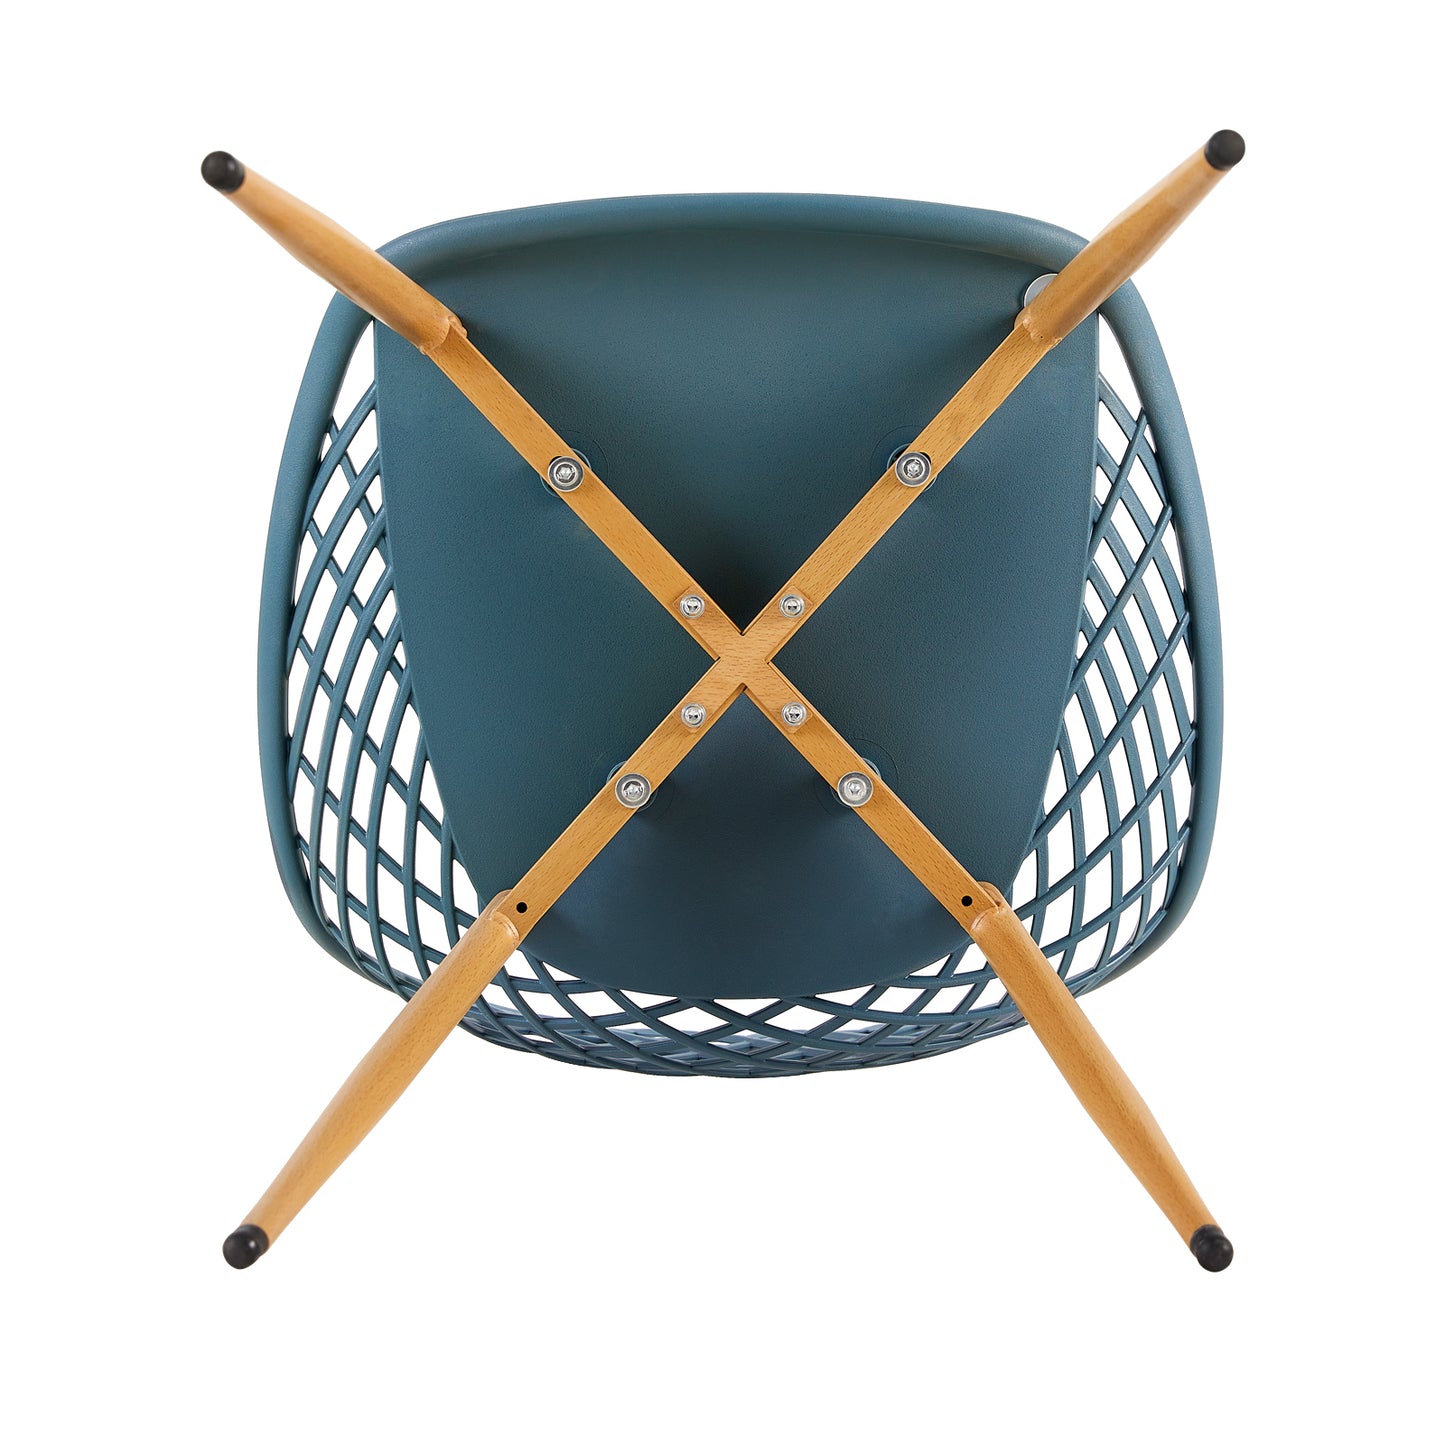 MILAN Hollow Chair with Iron Legs - Dark Gray Blue